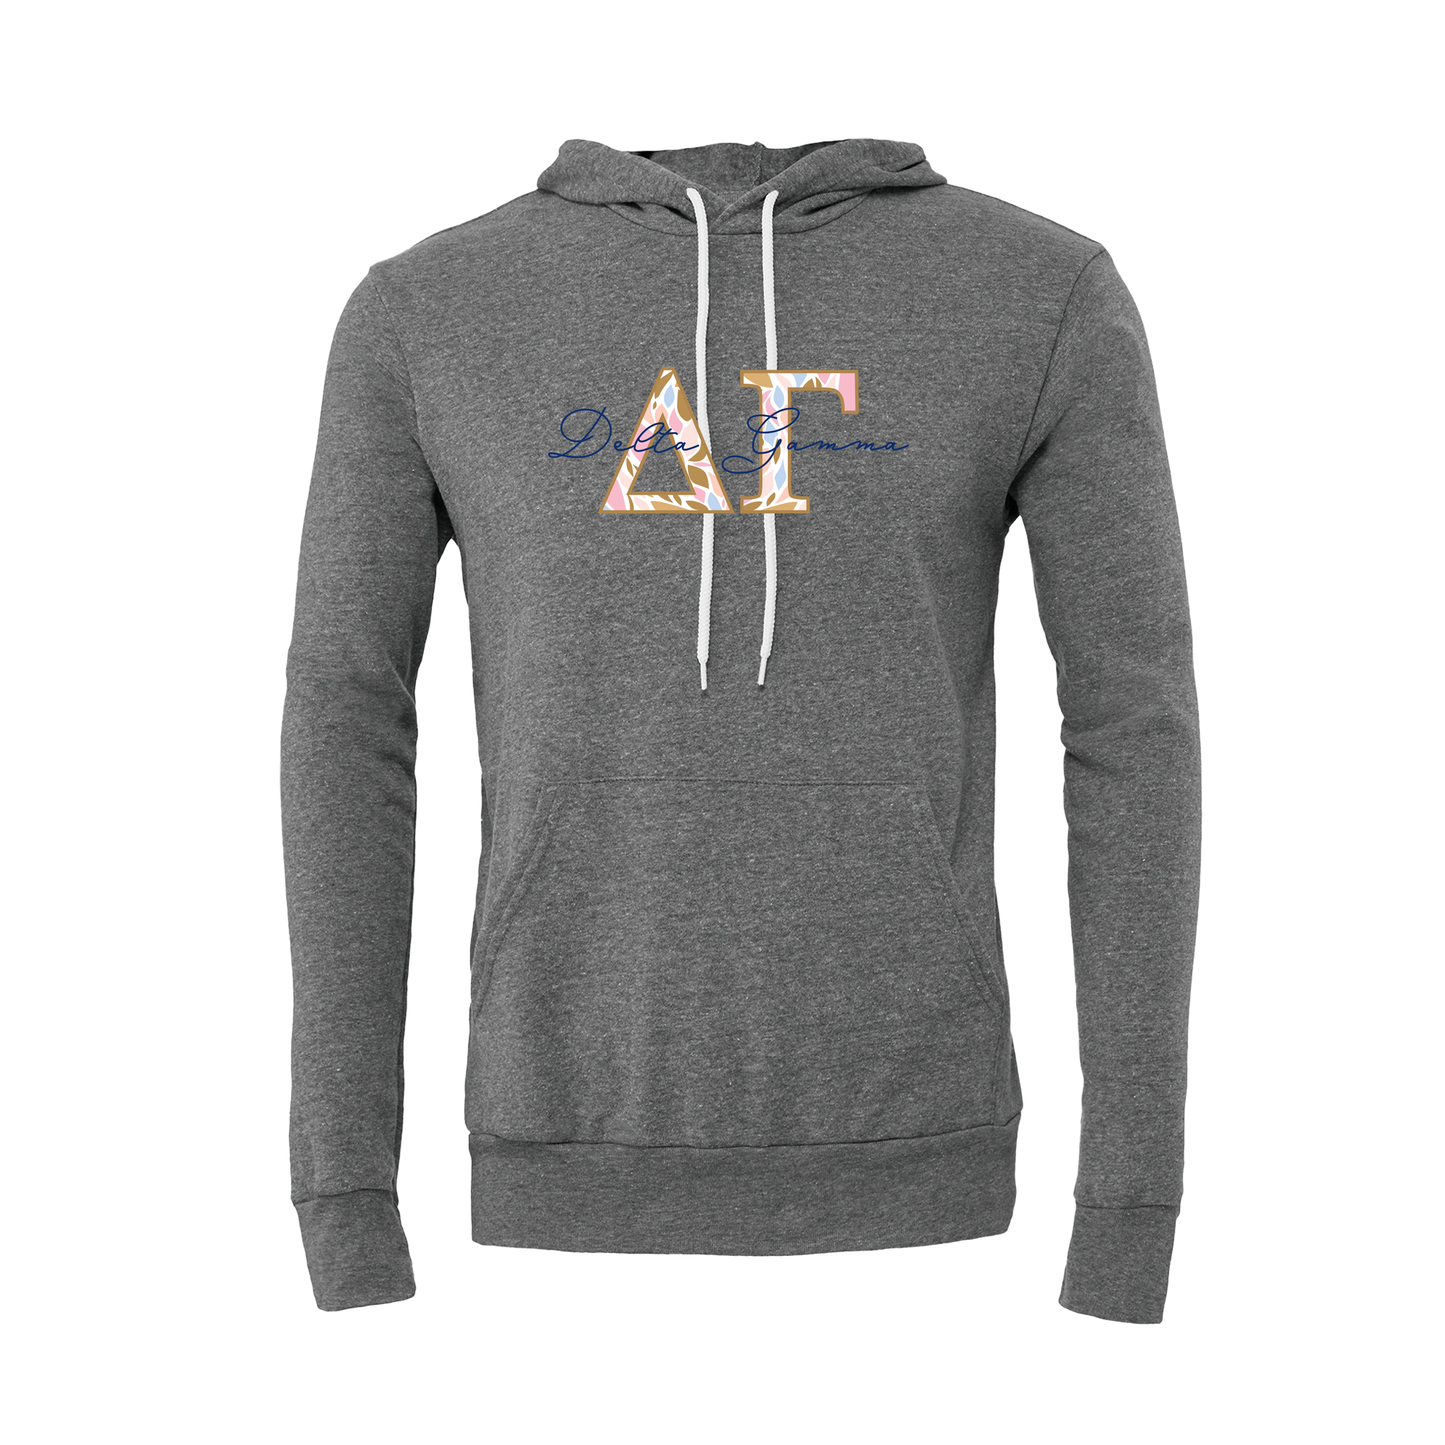 Delta Gamma Applique Letters Hooded Sweatshirt